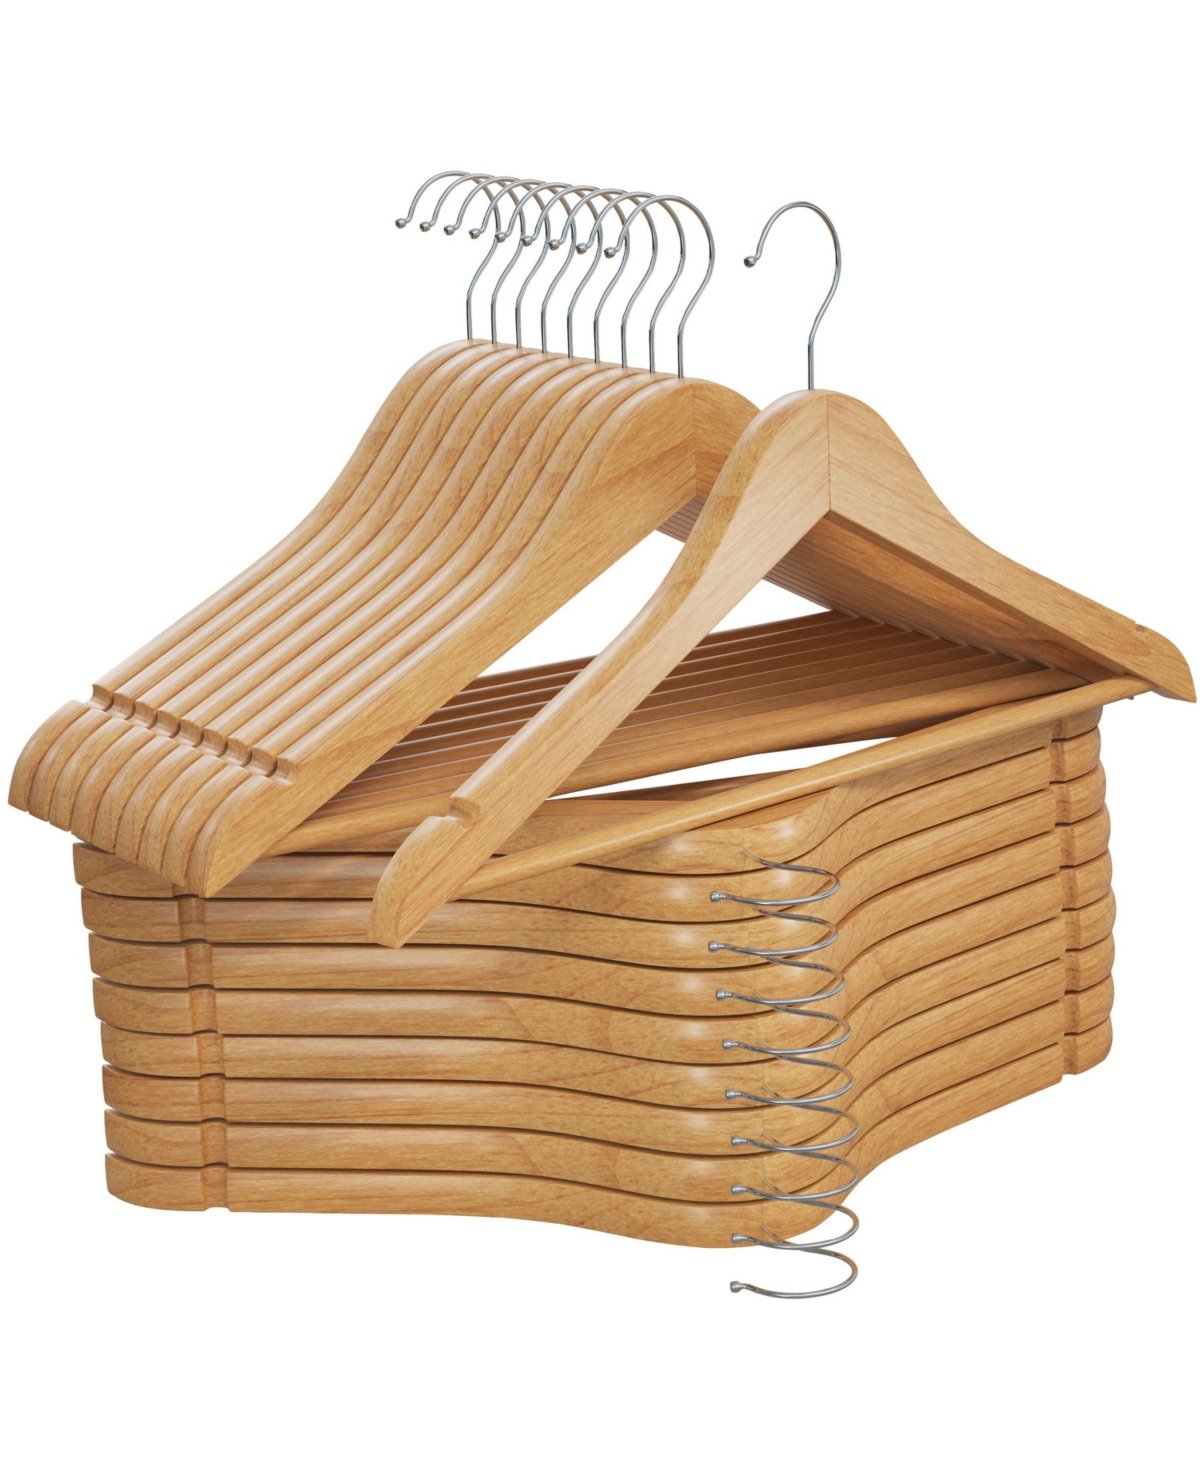 30 Pack Natural Wood Solid Wood Clothes Hangers, Coat Hanger, Wooden Hangers - Wood